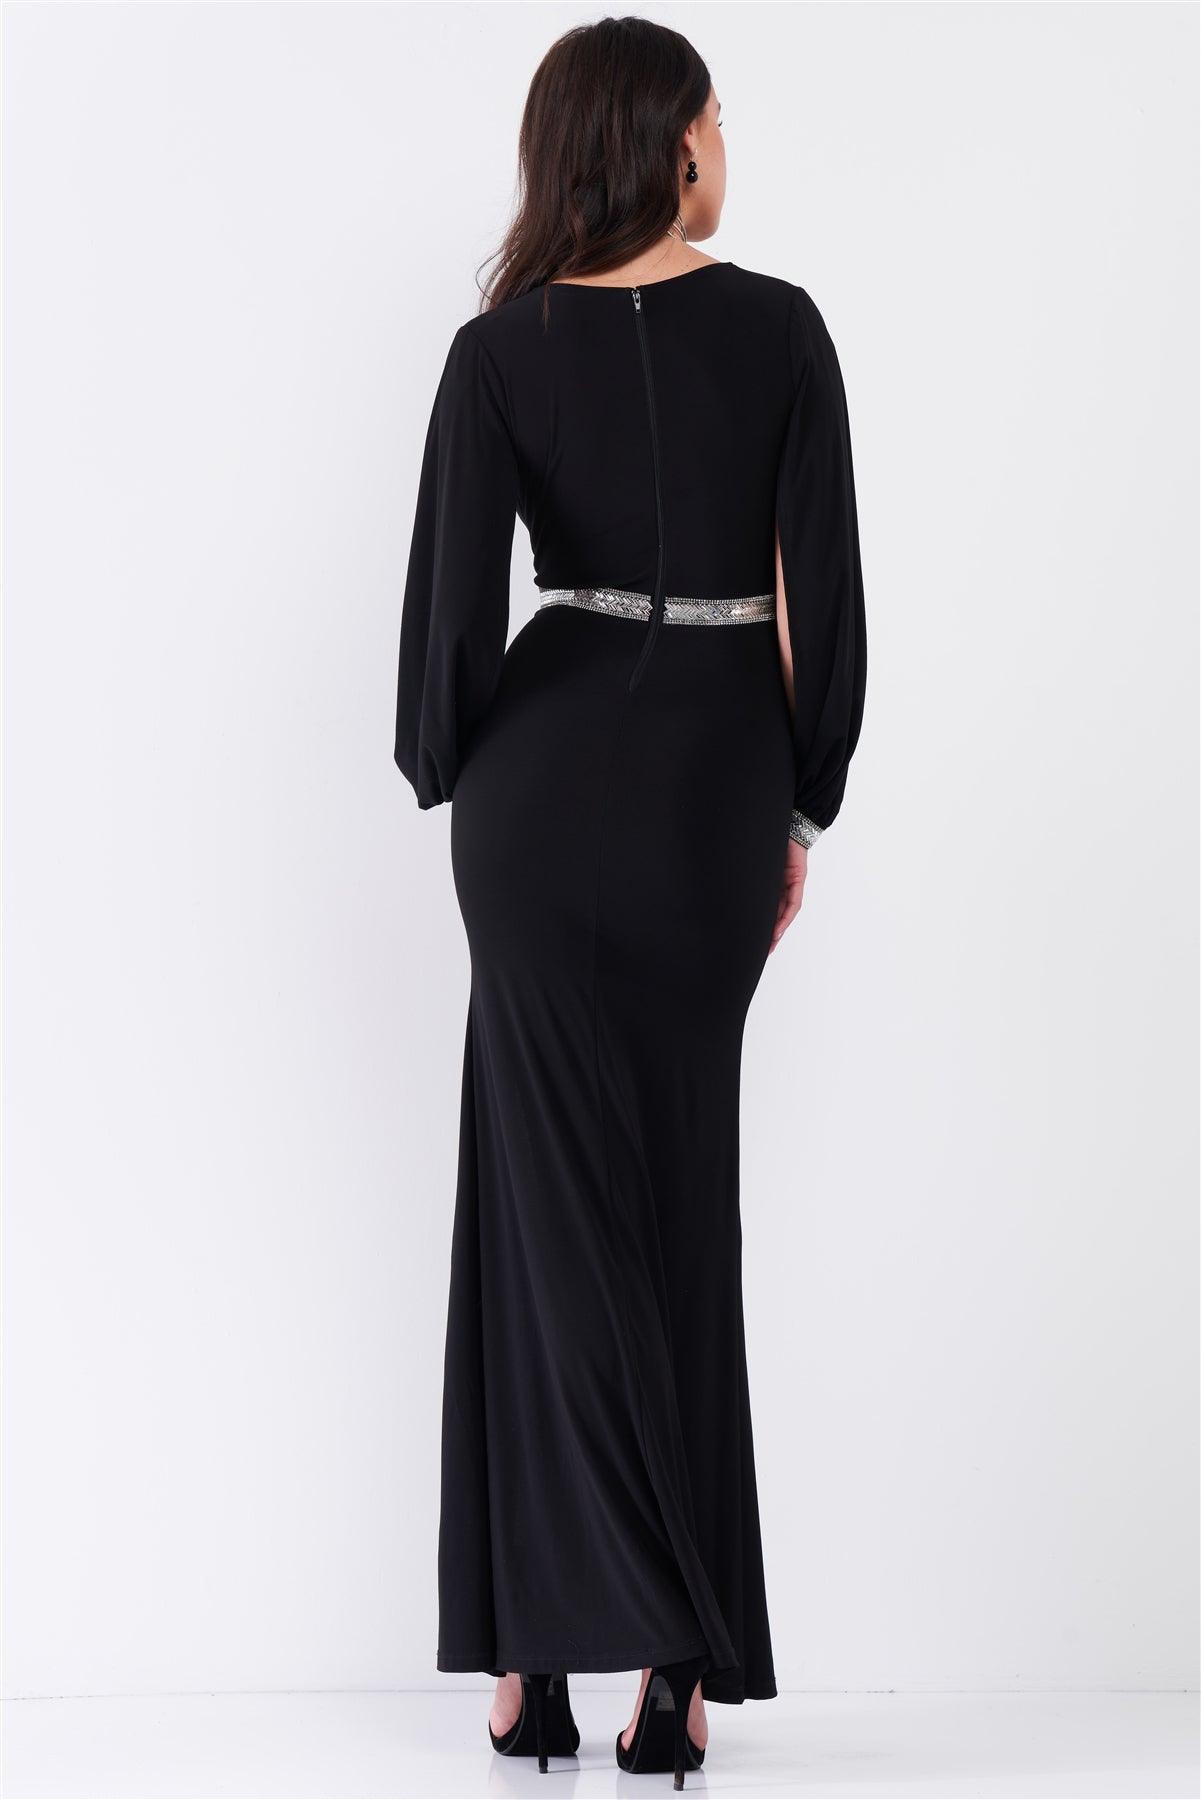 Black Deep Plunged V-Neck Long Slit Sleeve Rhinestone Decorated Waist And Wrist Side Slit Maxi Dress /3-2-1